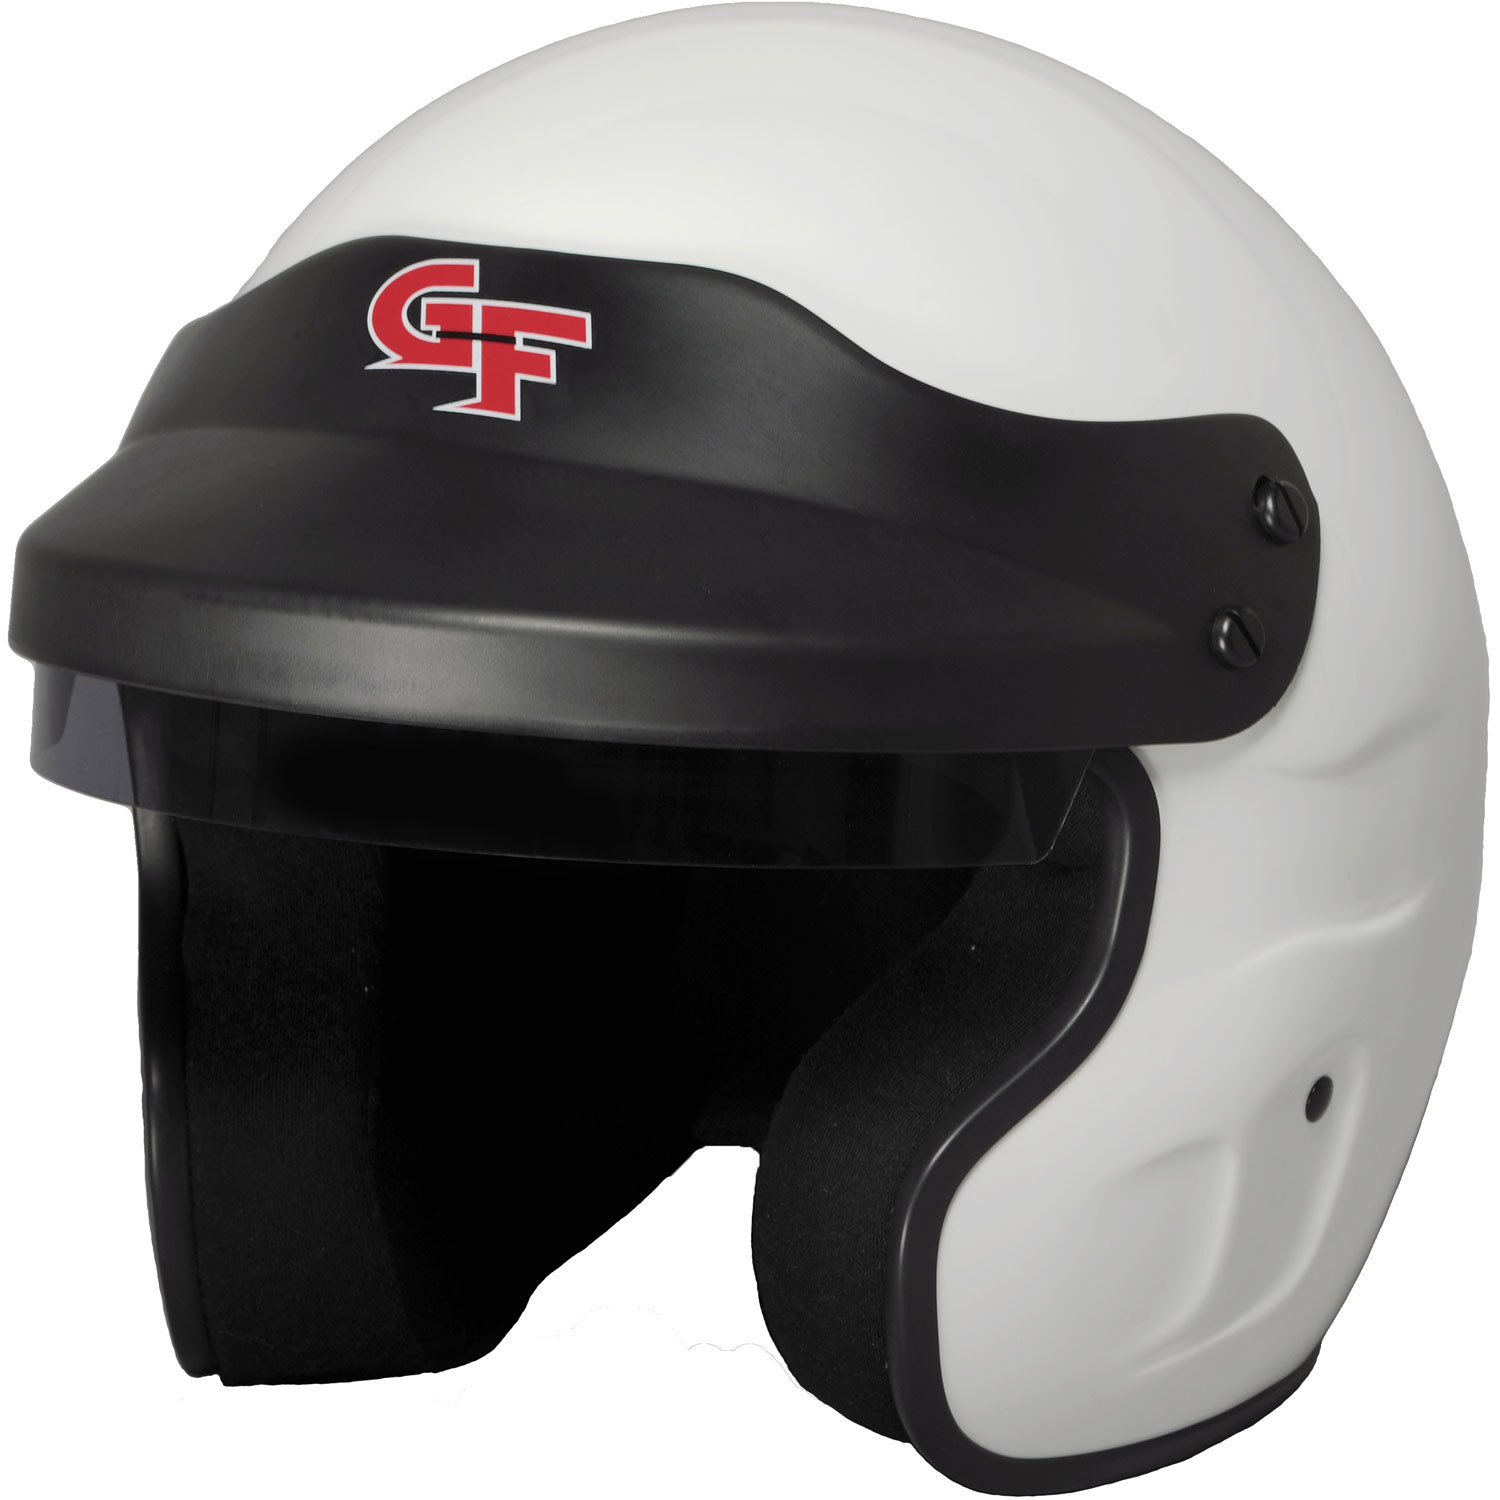 Helmet GF1 Open Large White SA2020 - 13002LRGWH